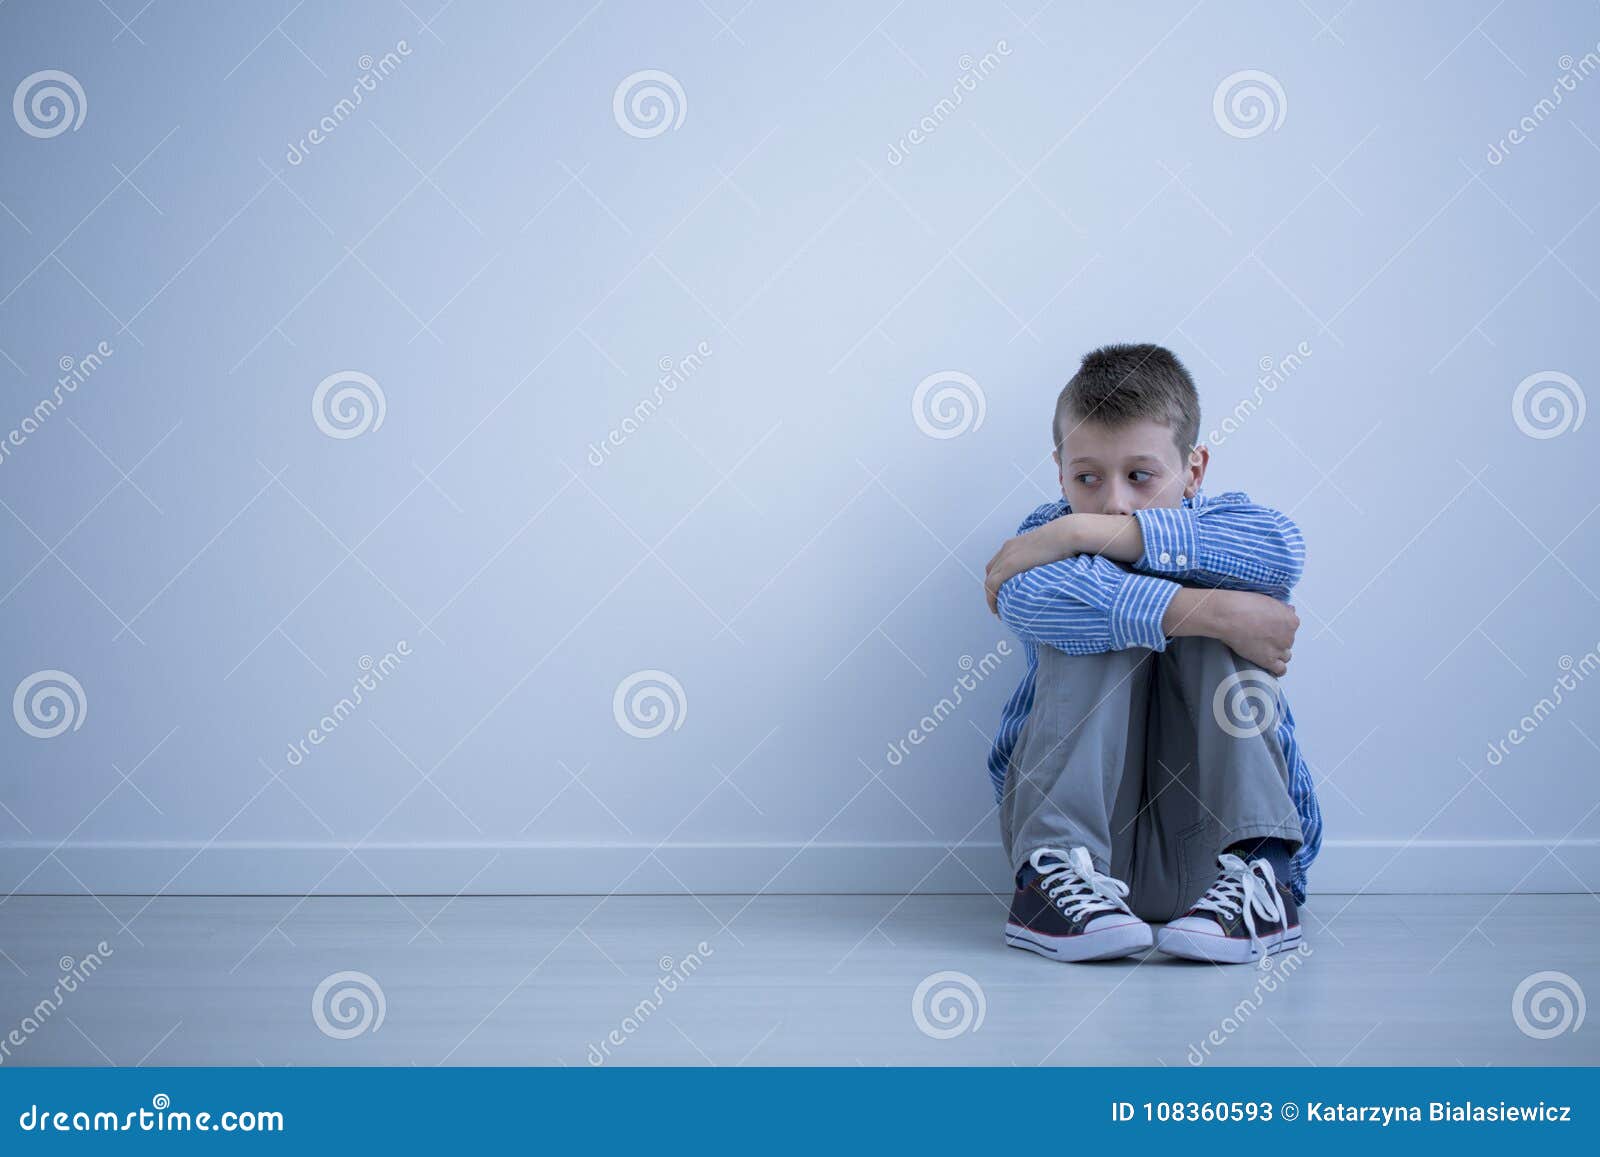 sad alienated child with autism